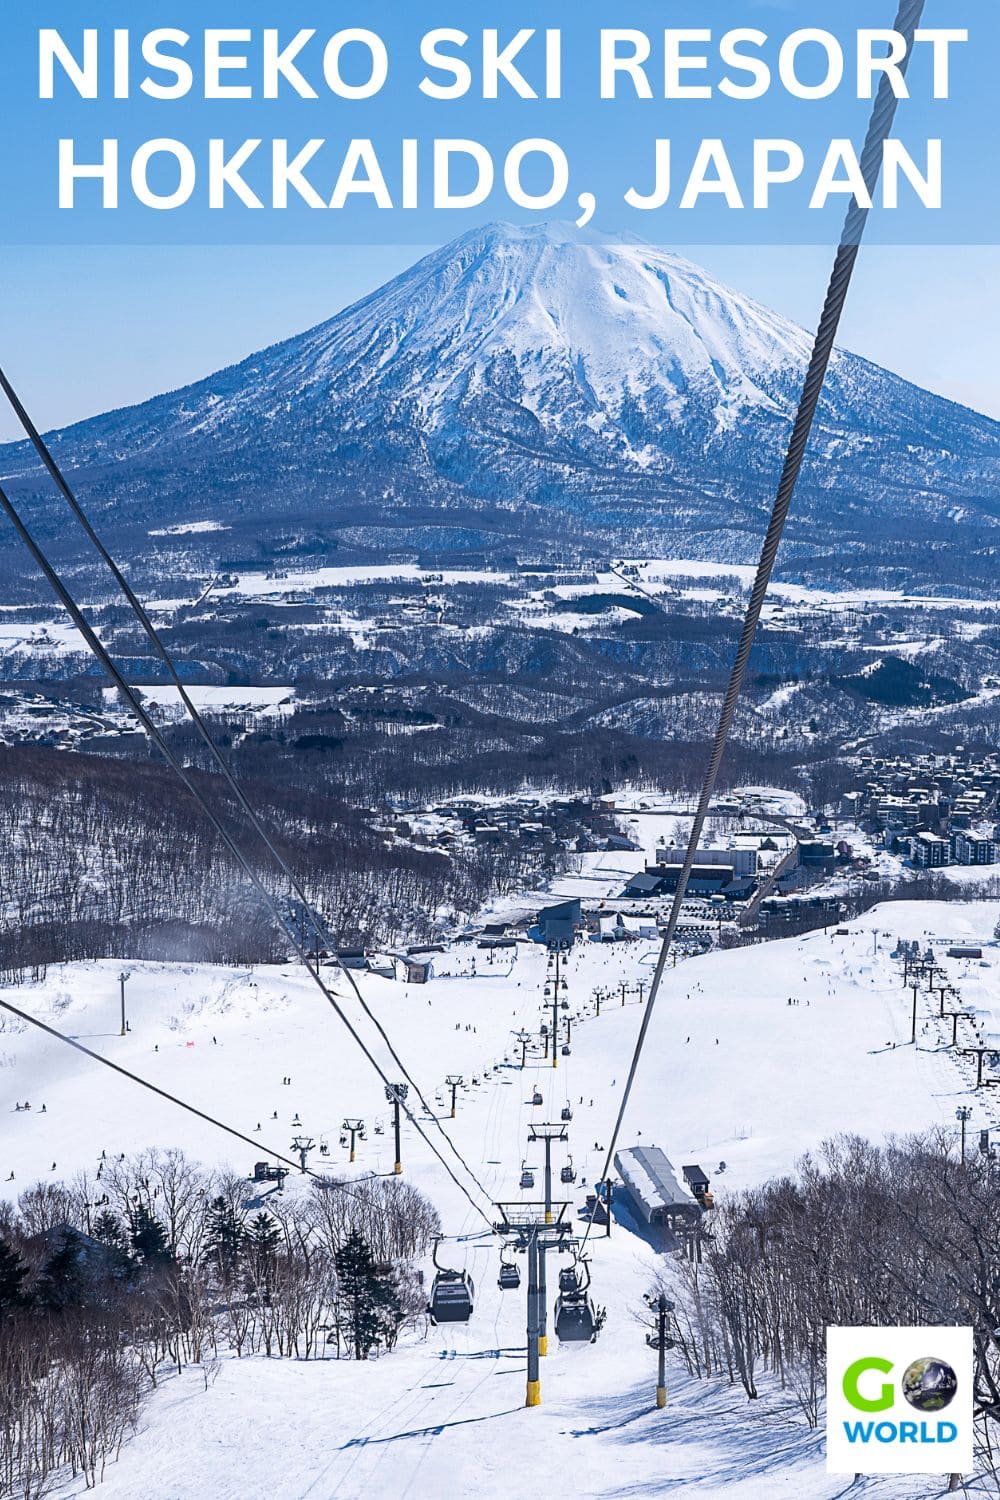 Find out why Australian and other international skiers are heading to Niseko Ski Resort in Hokkaido, Japan for epic powder. #skiingJapan #hokkaidojapan